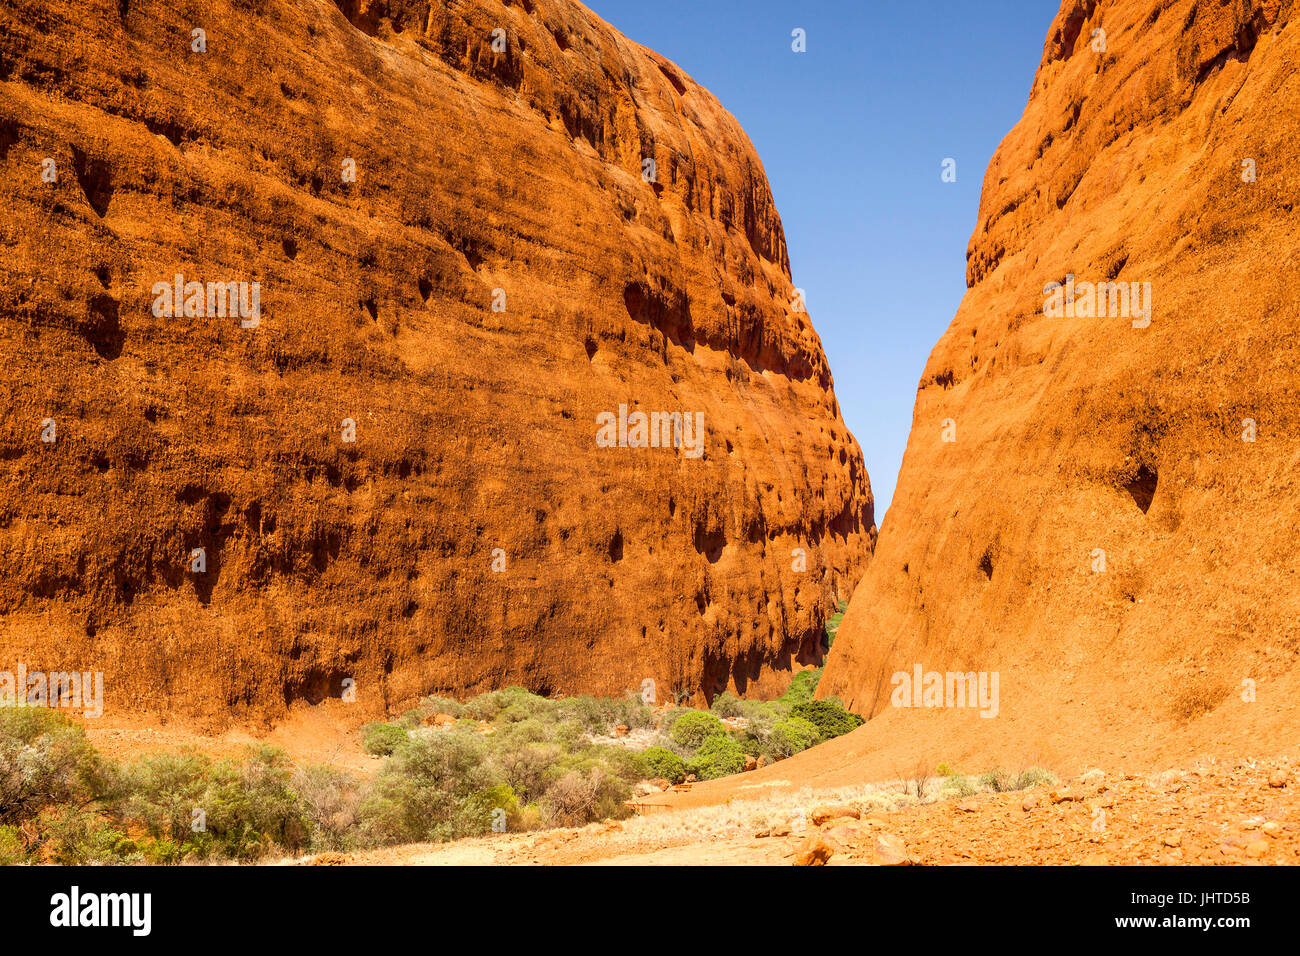 Inside and around the massive Kata Tjuta (olgas) central Australia Stock Photo